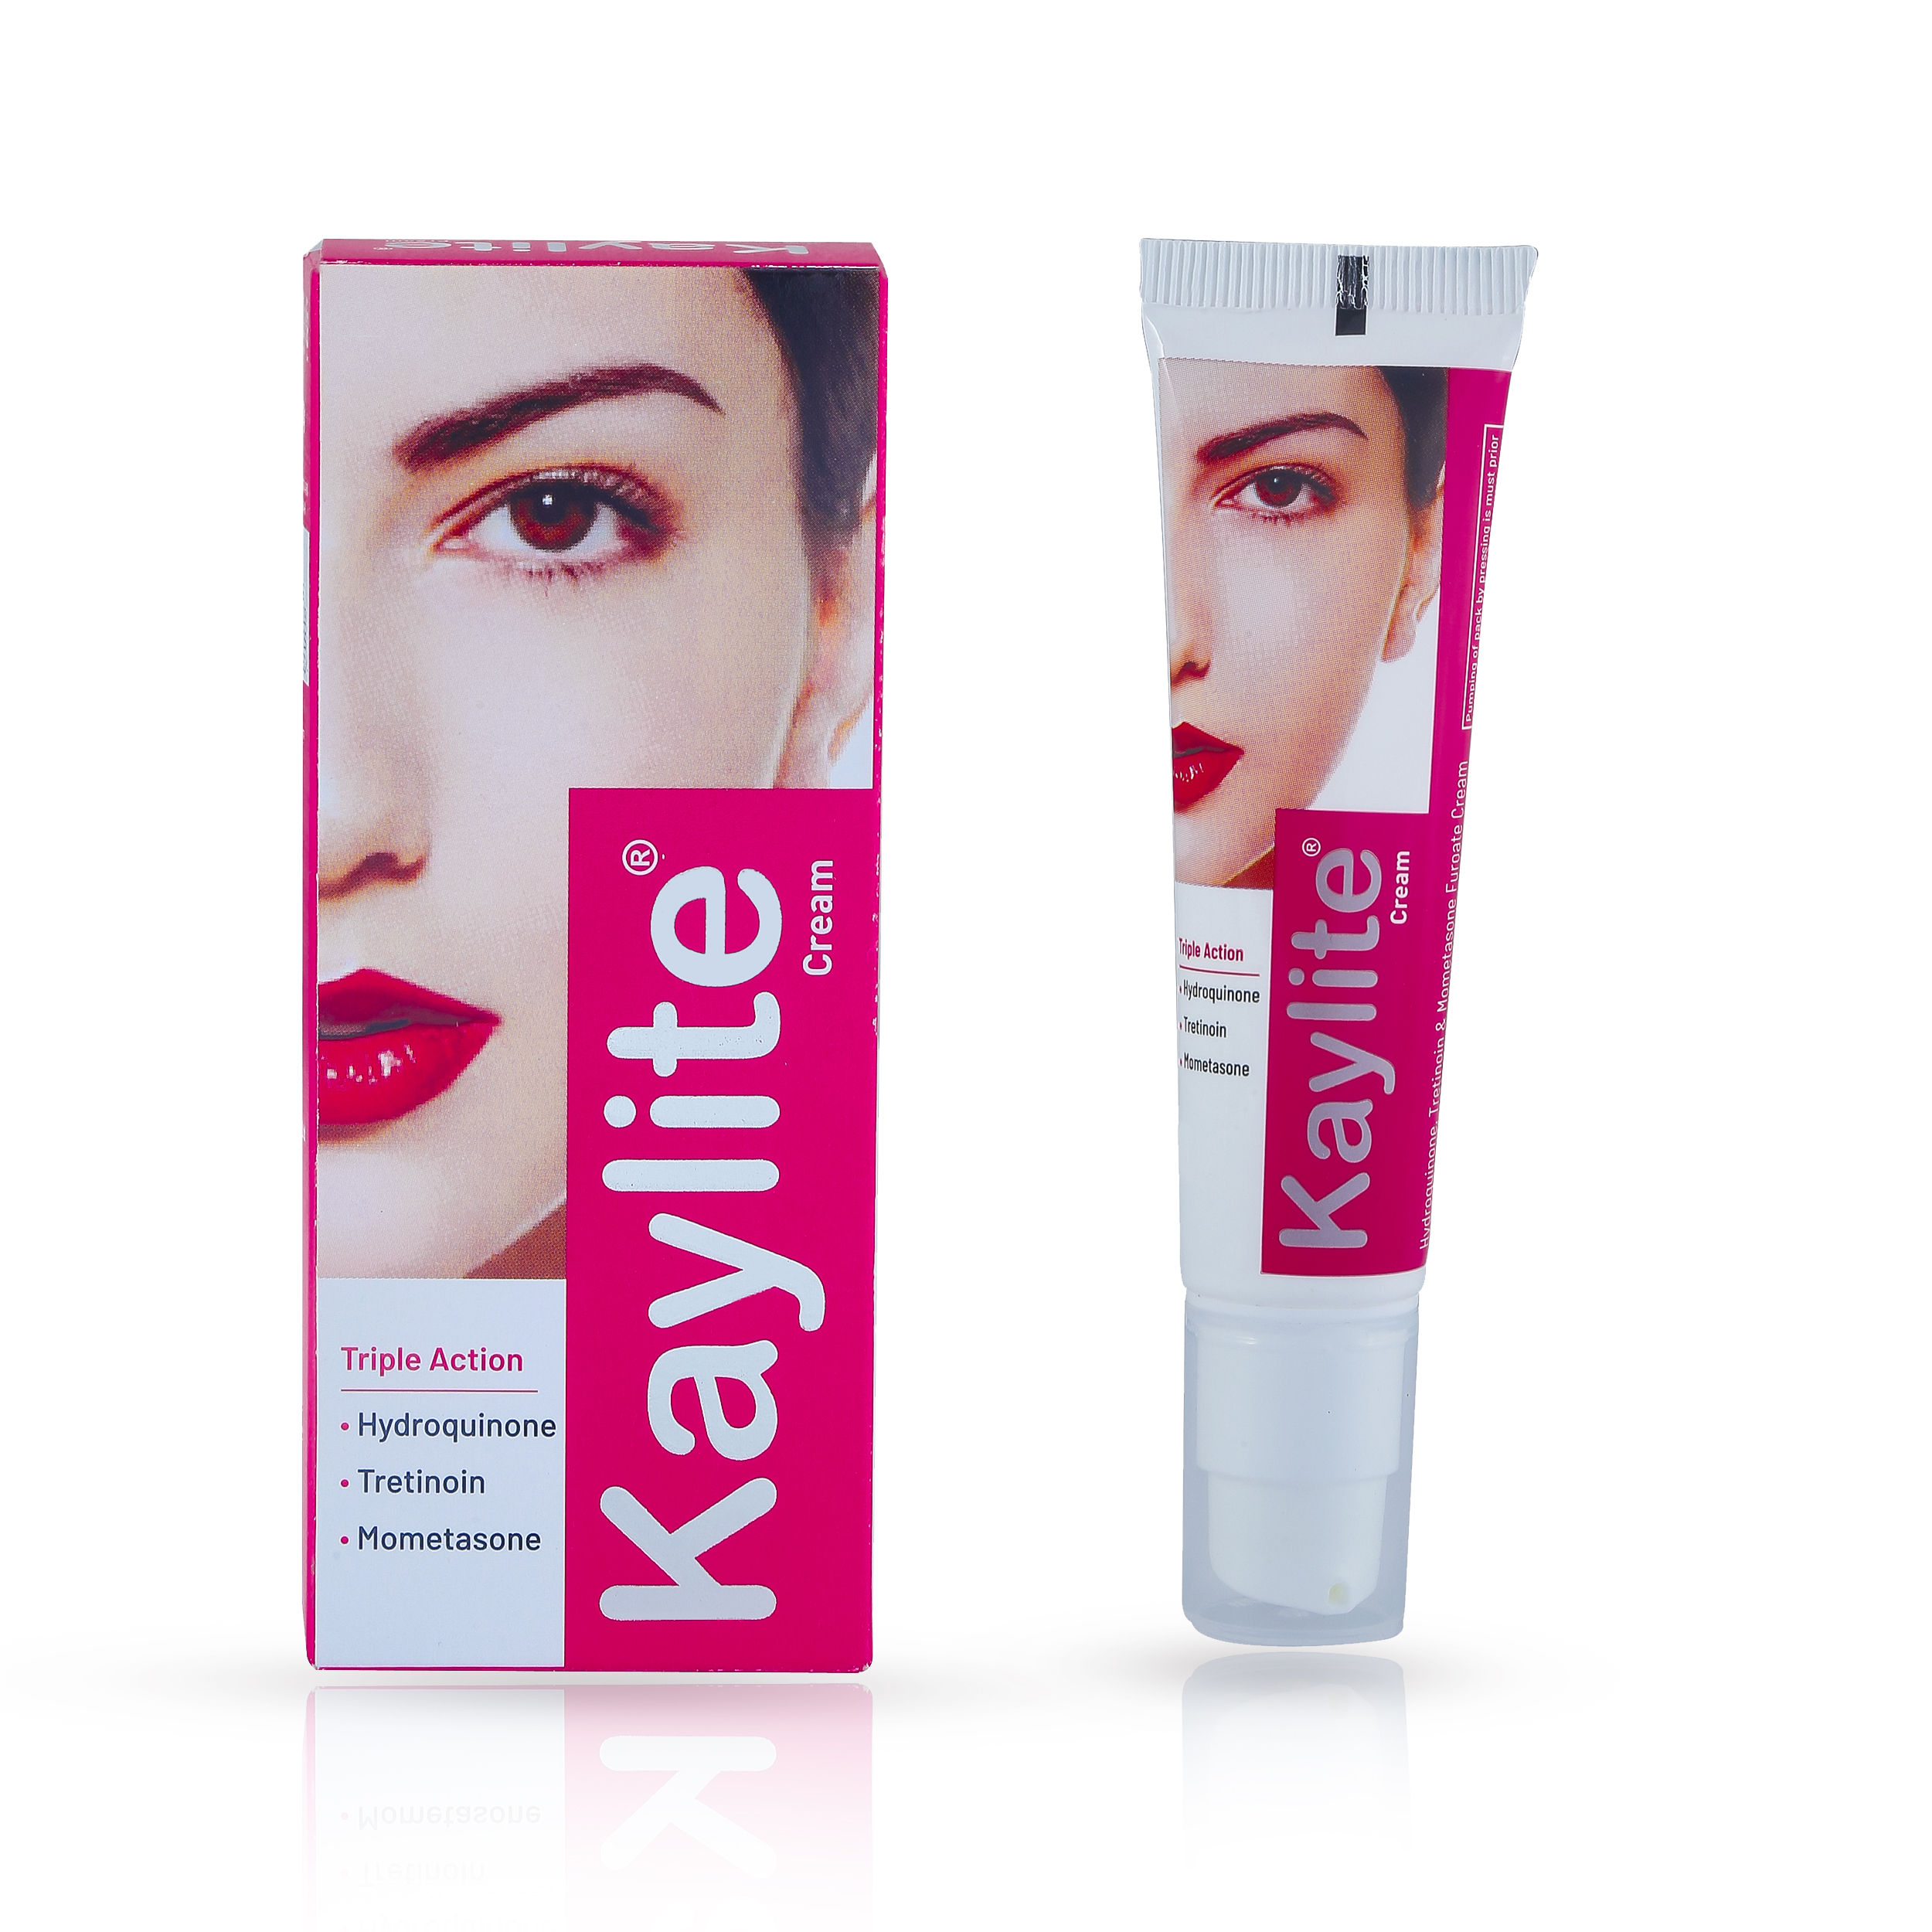 Kaylite cream for skincare